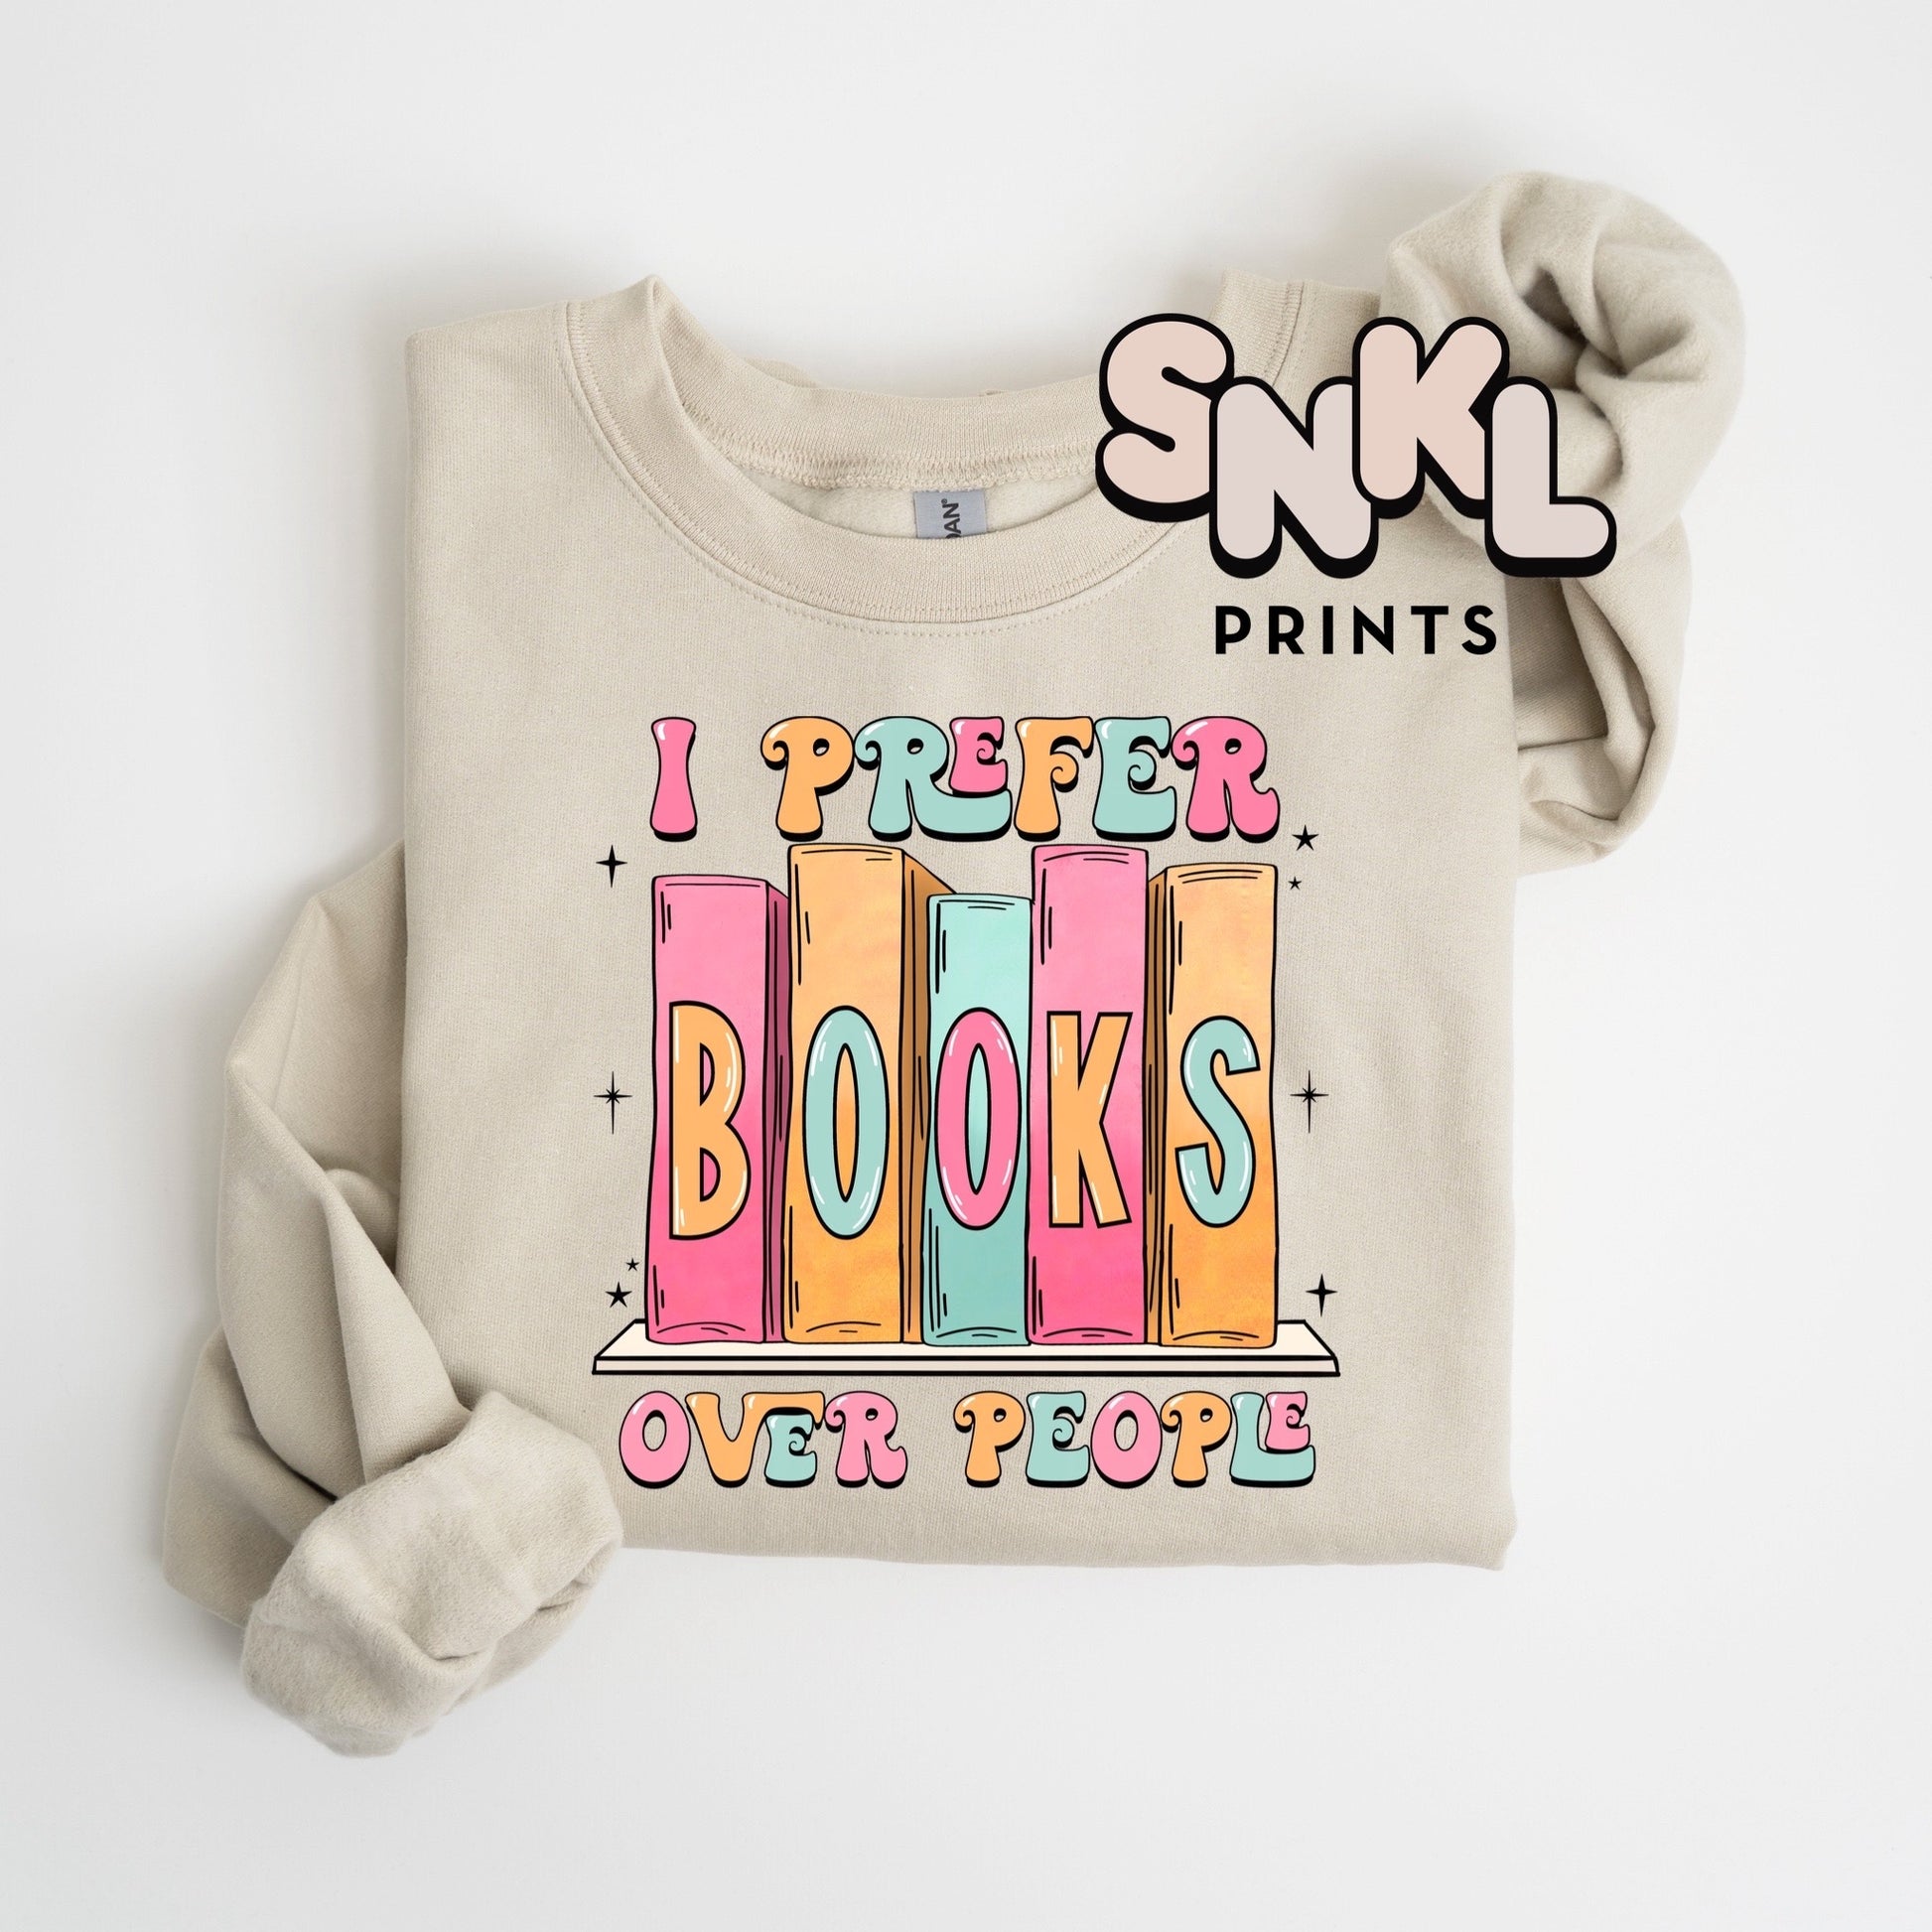 I Prefer Books Over People| Adult - SNKL Prints